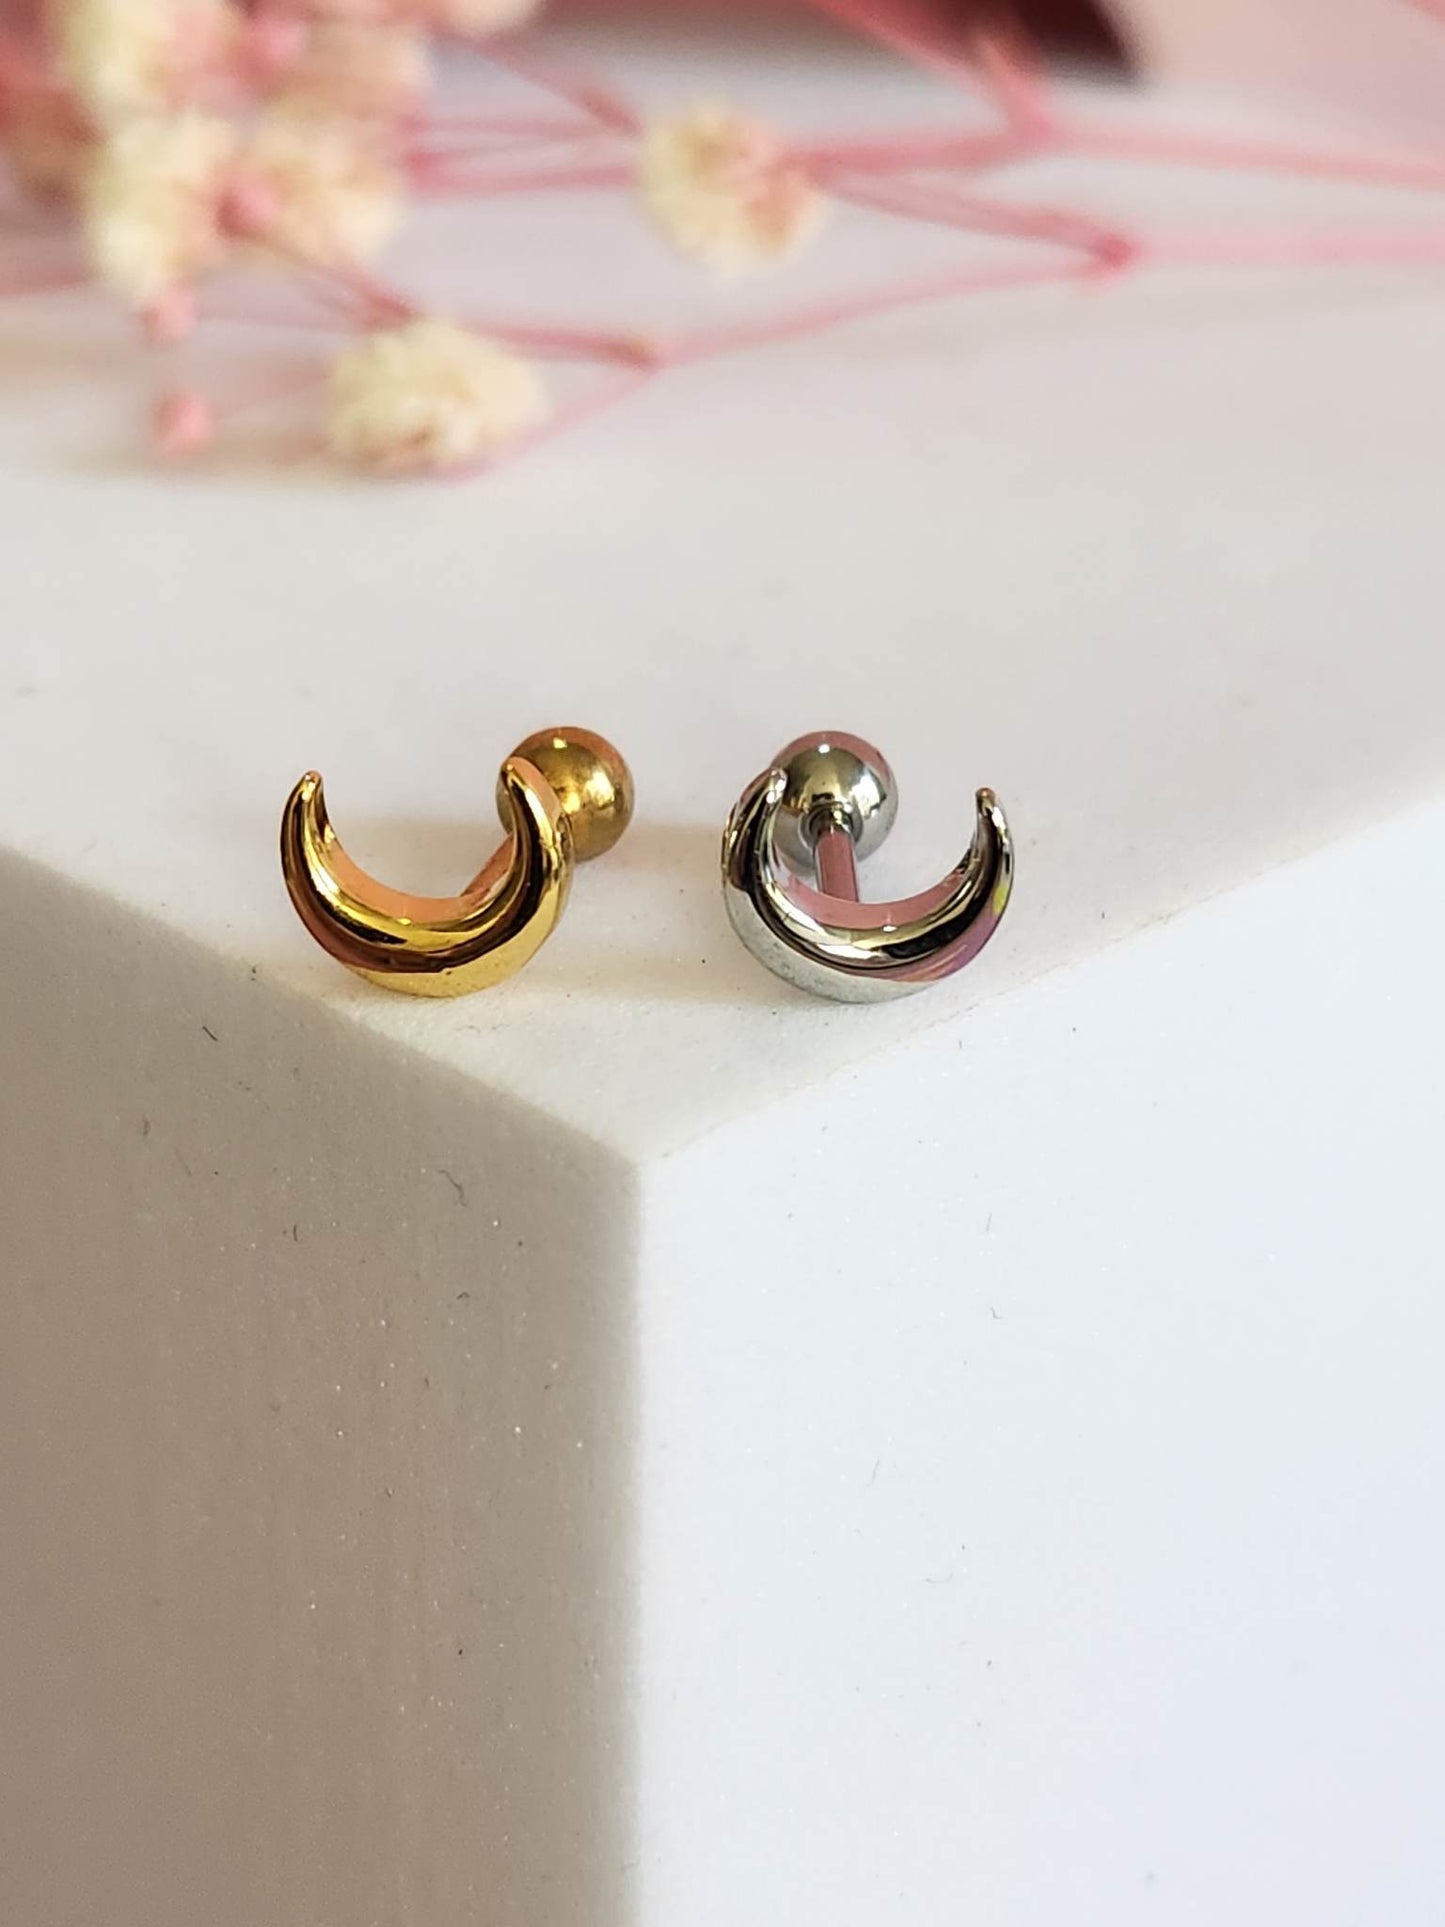 Cresent Moon 16g Earrings Design Tragus Daith Cartilage Ear Piercing - Pierced n Proud